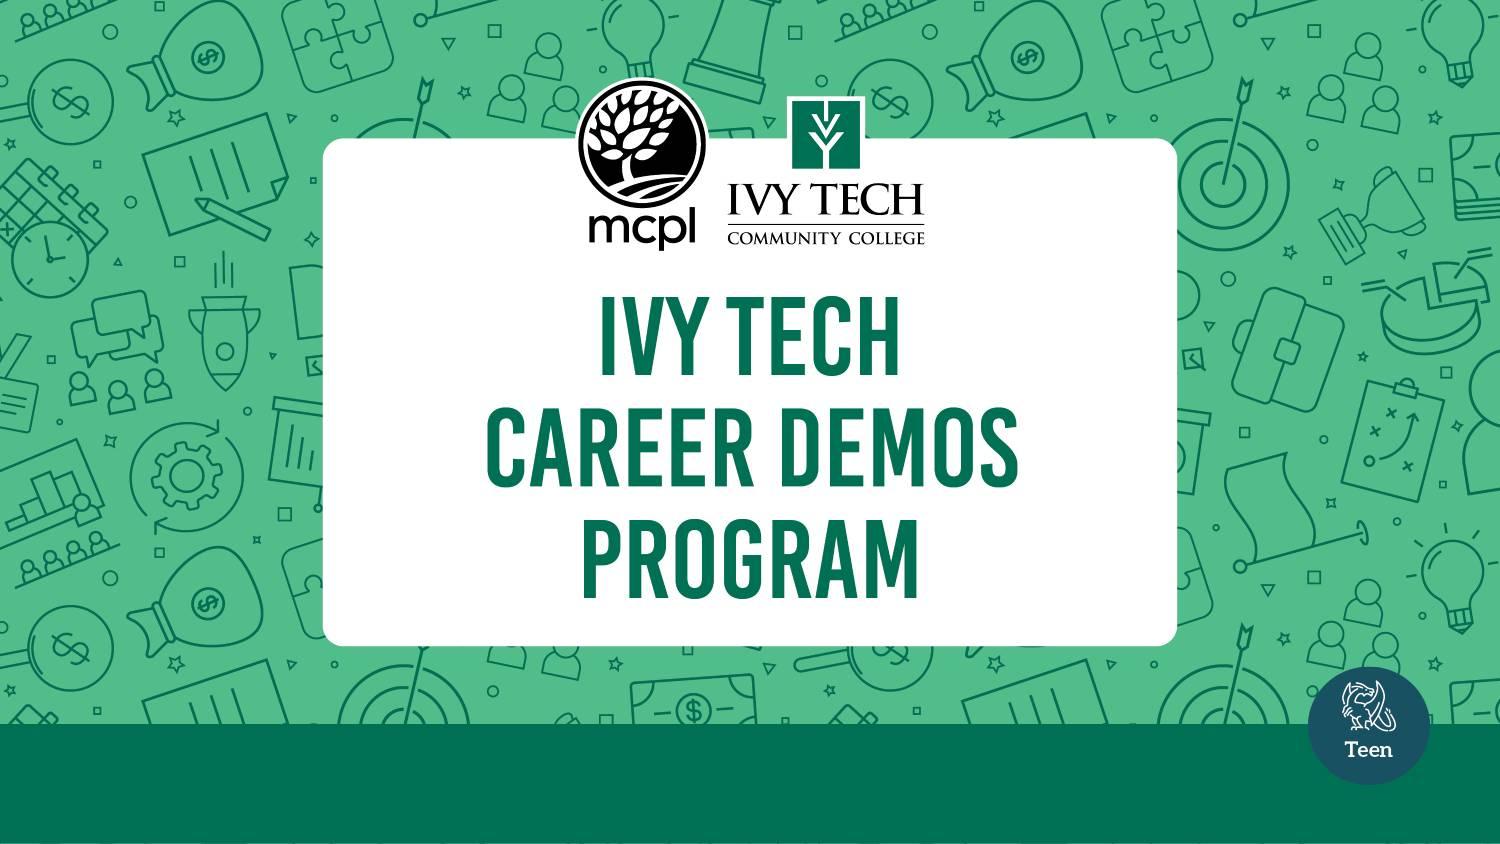 Ivy Tech Career Demos